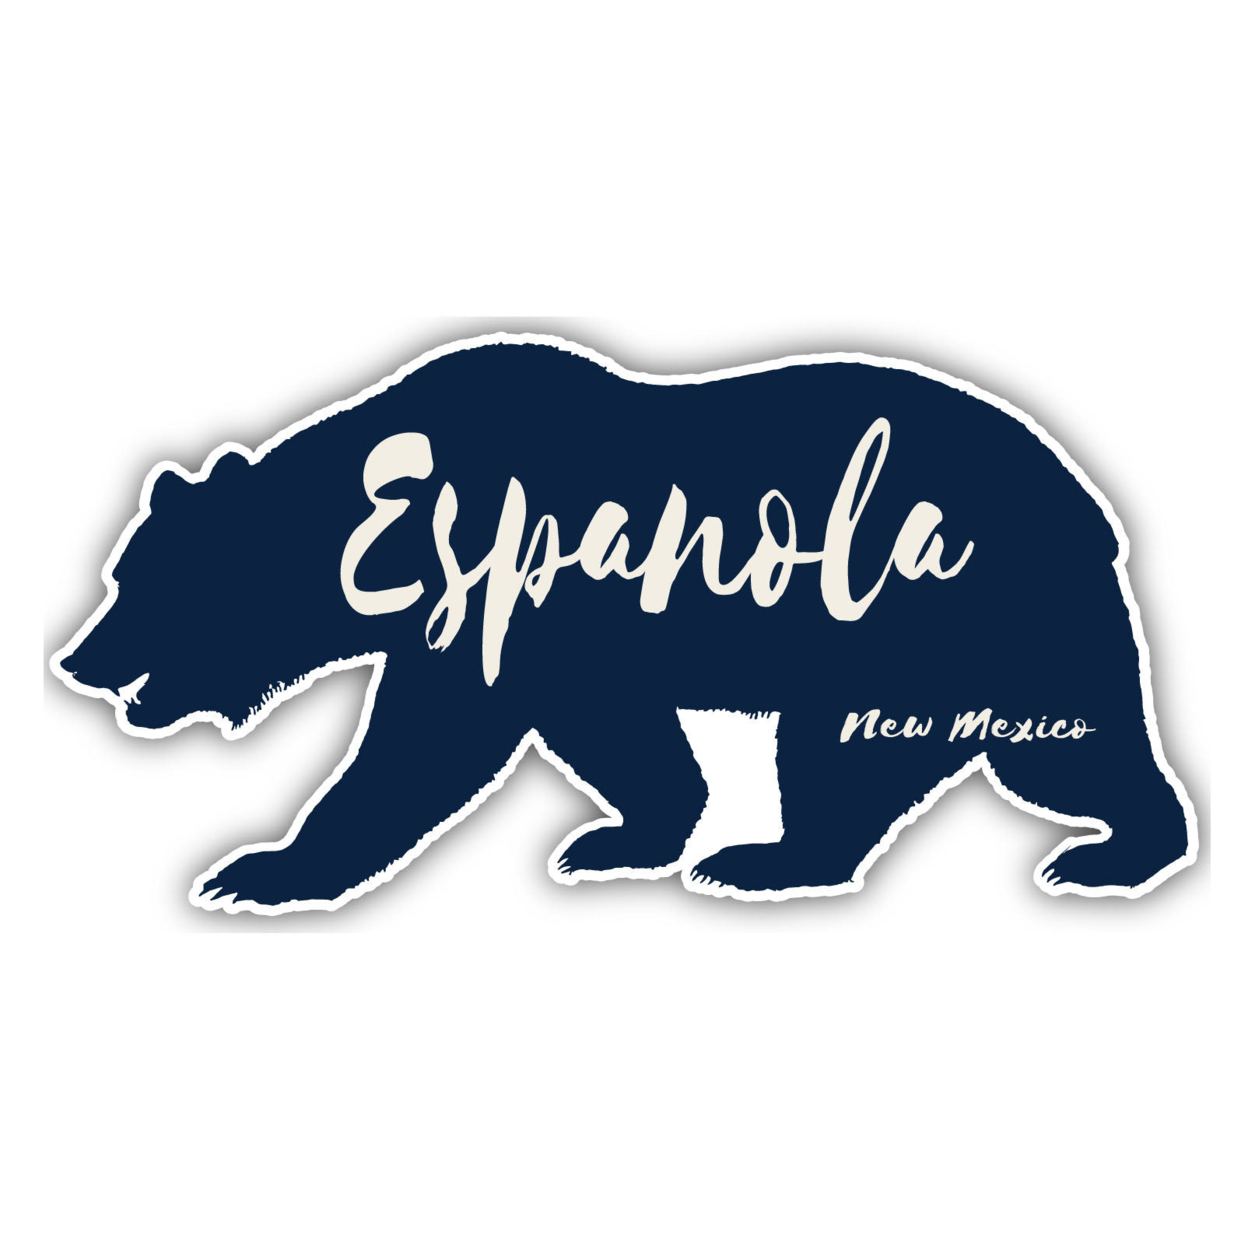 Espanola New Mexico Souvenir Decorative Stickers (Choose Theme And Size) - Single Unit, 6-Inch, Bear